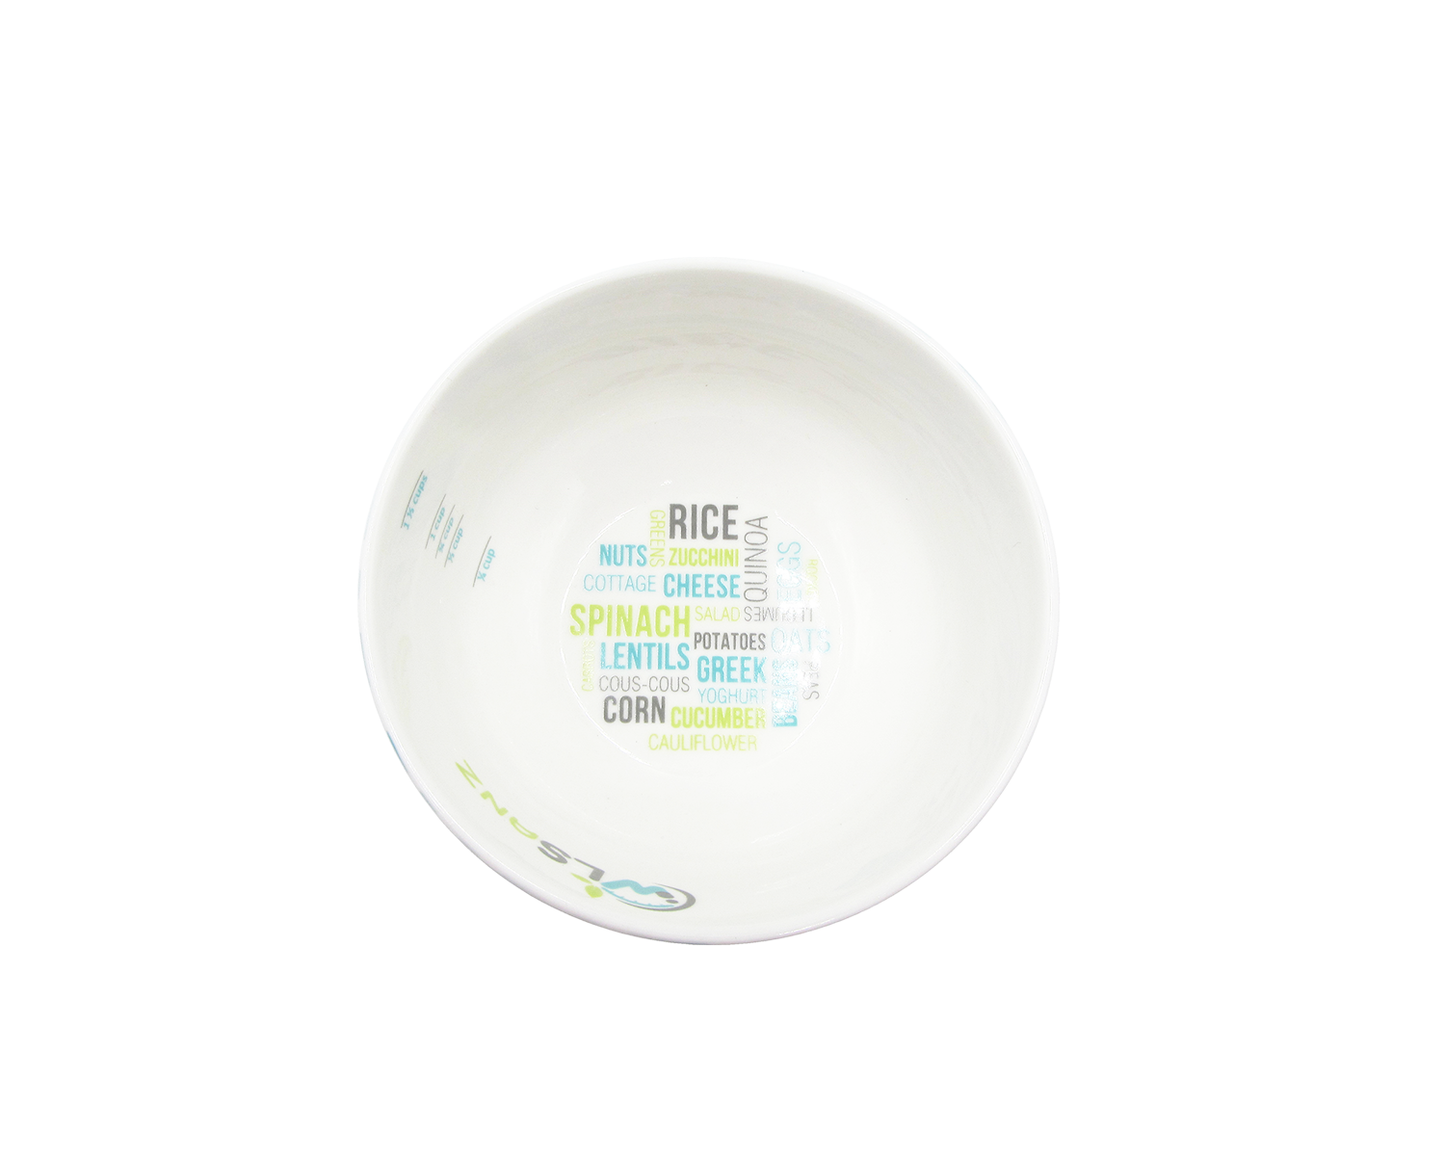 BN Portion Control Plate & Bowl - High Quality Porcelain